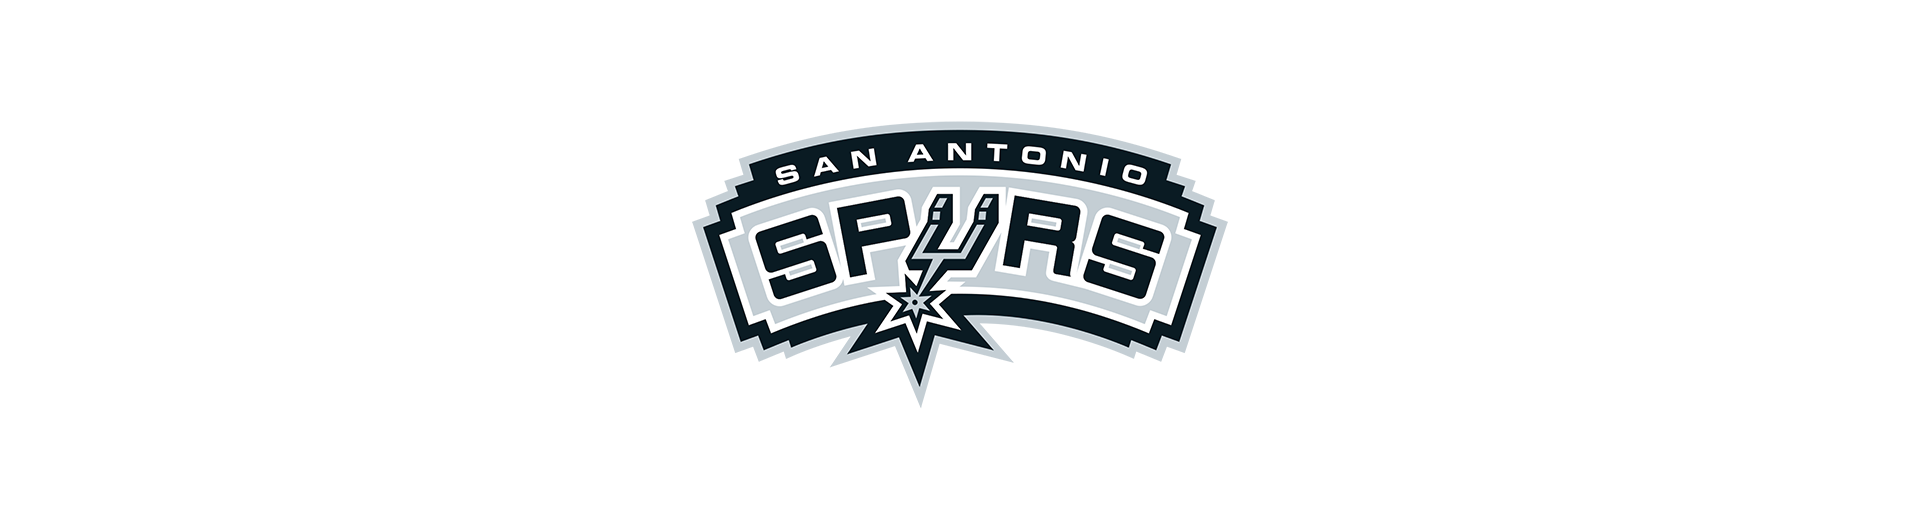 San Antonio Spurs (SAS)